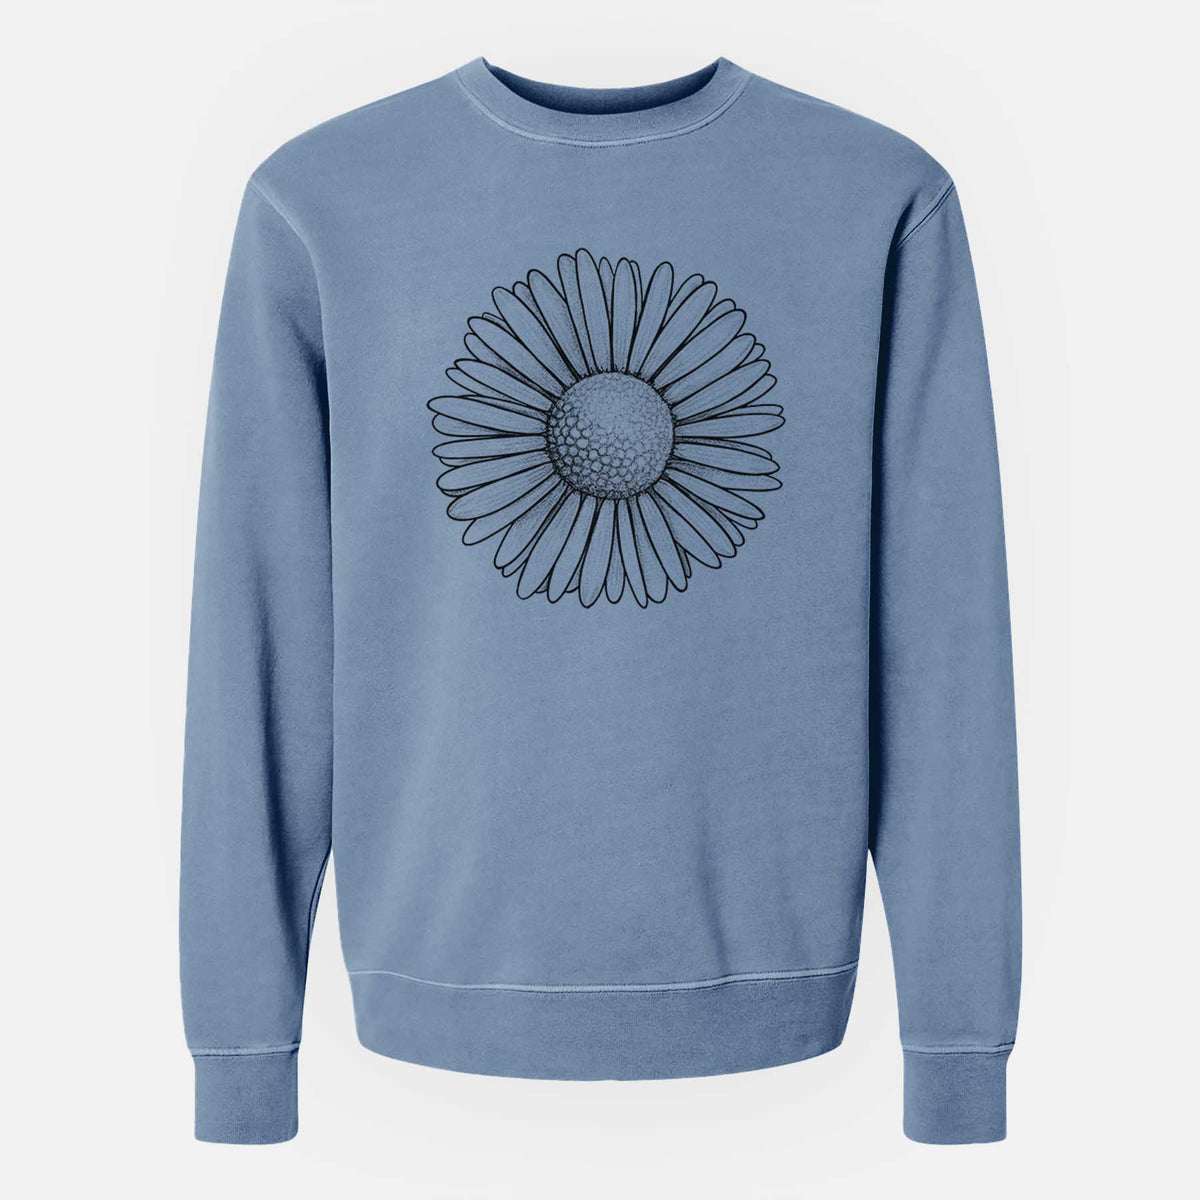 Bellis perennis - The Common Daisy - Unisex Pigment Dyed Crew Sweatshirt